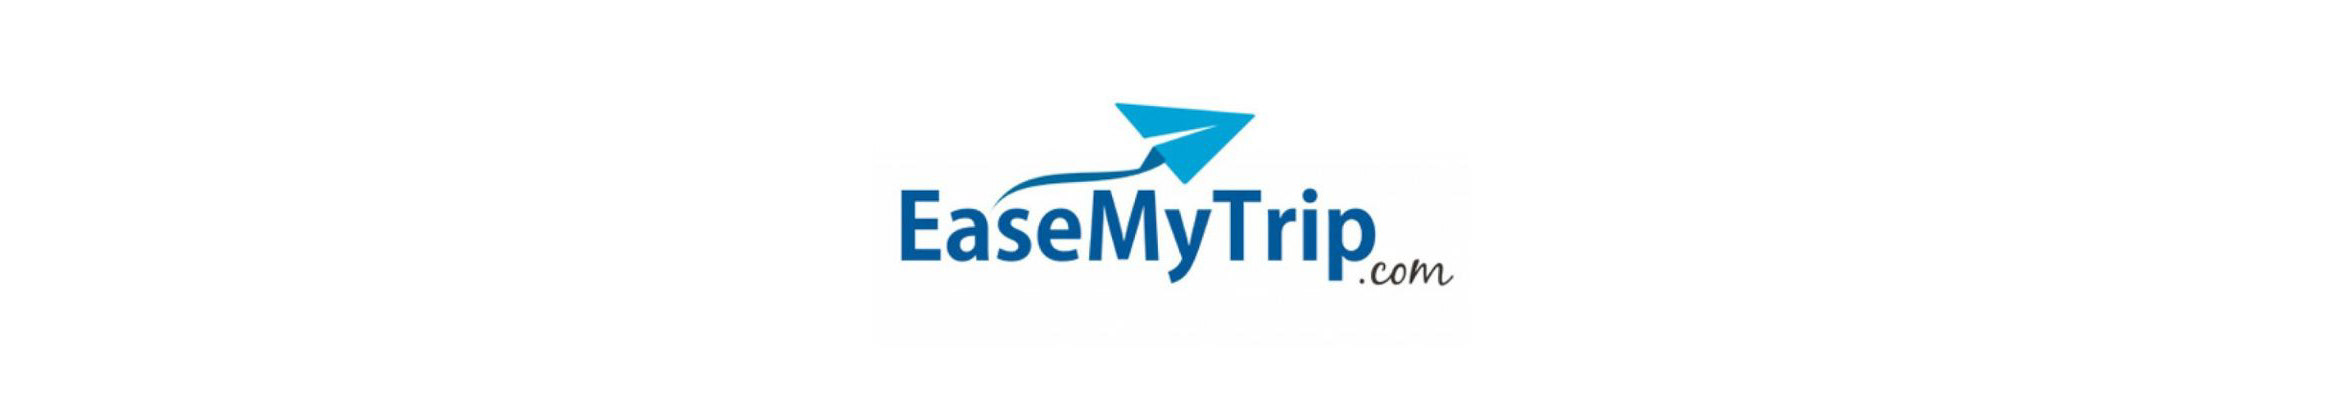 Banner de perfil de EaseMy Trip